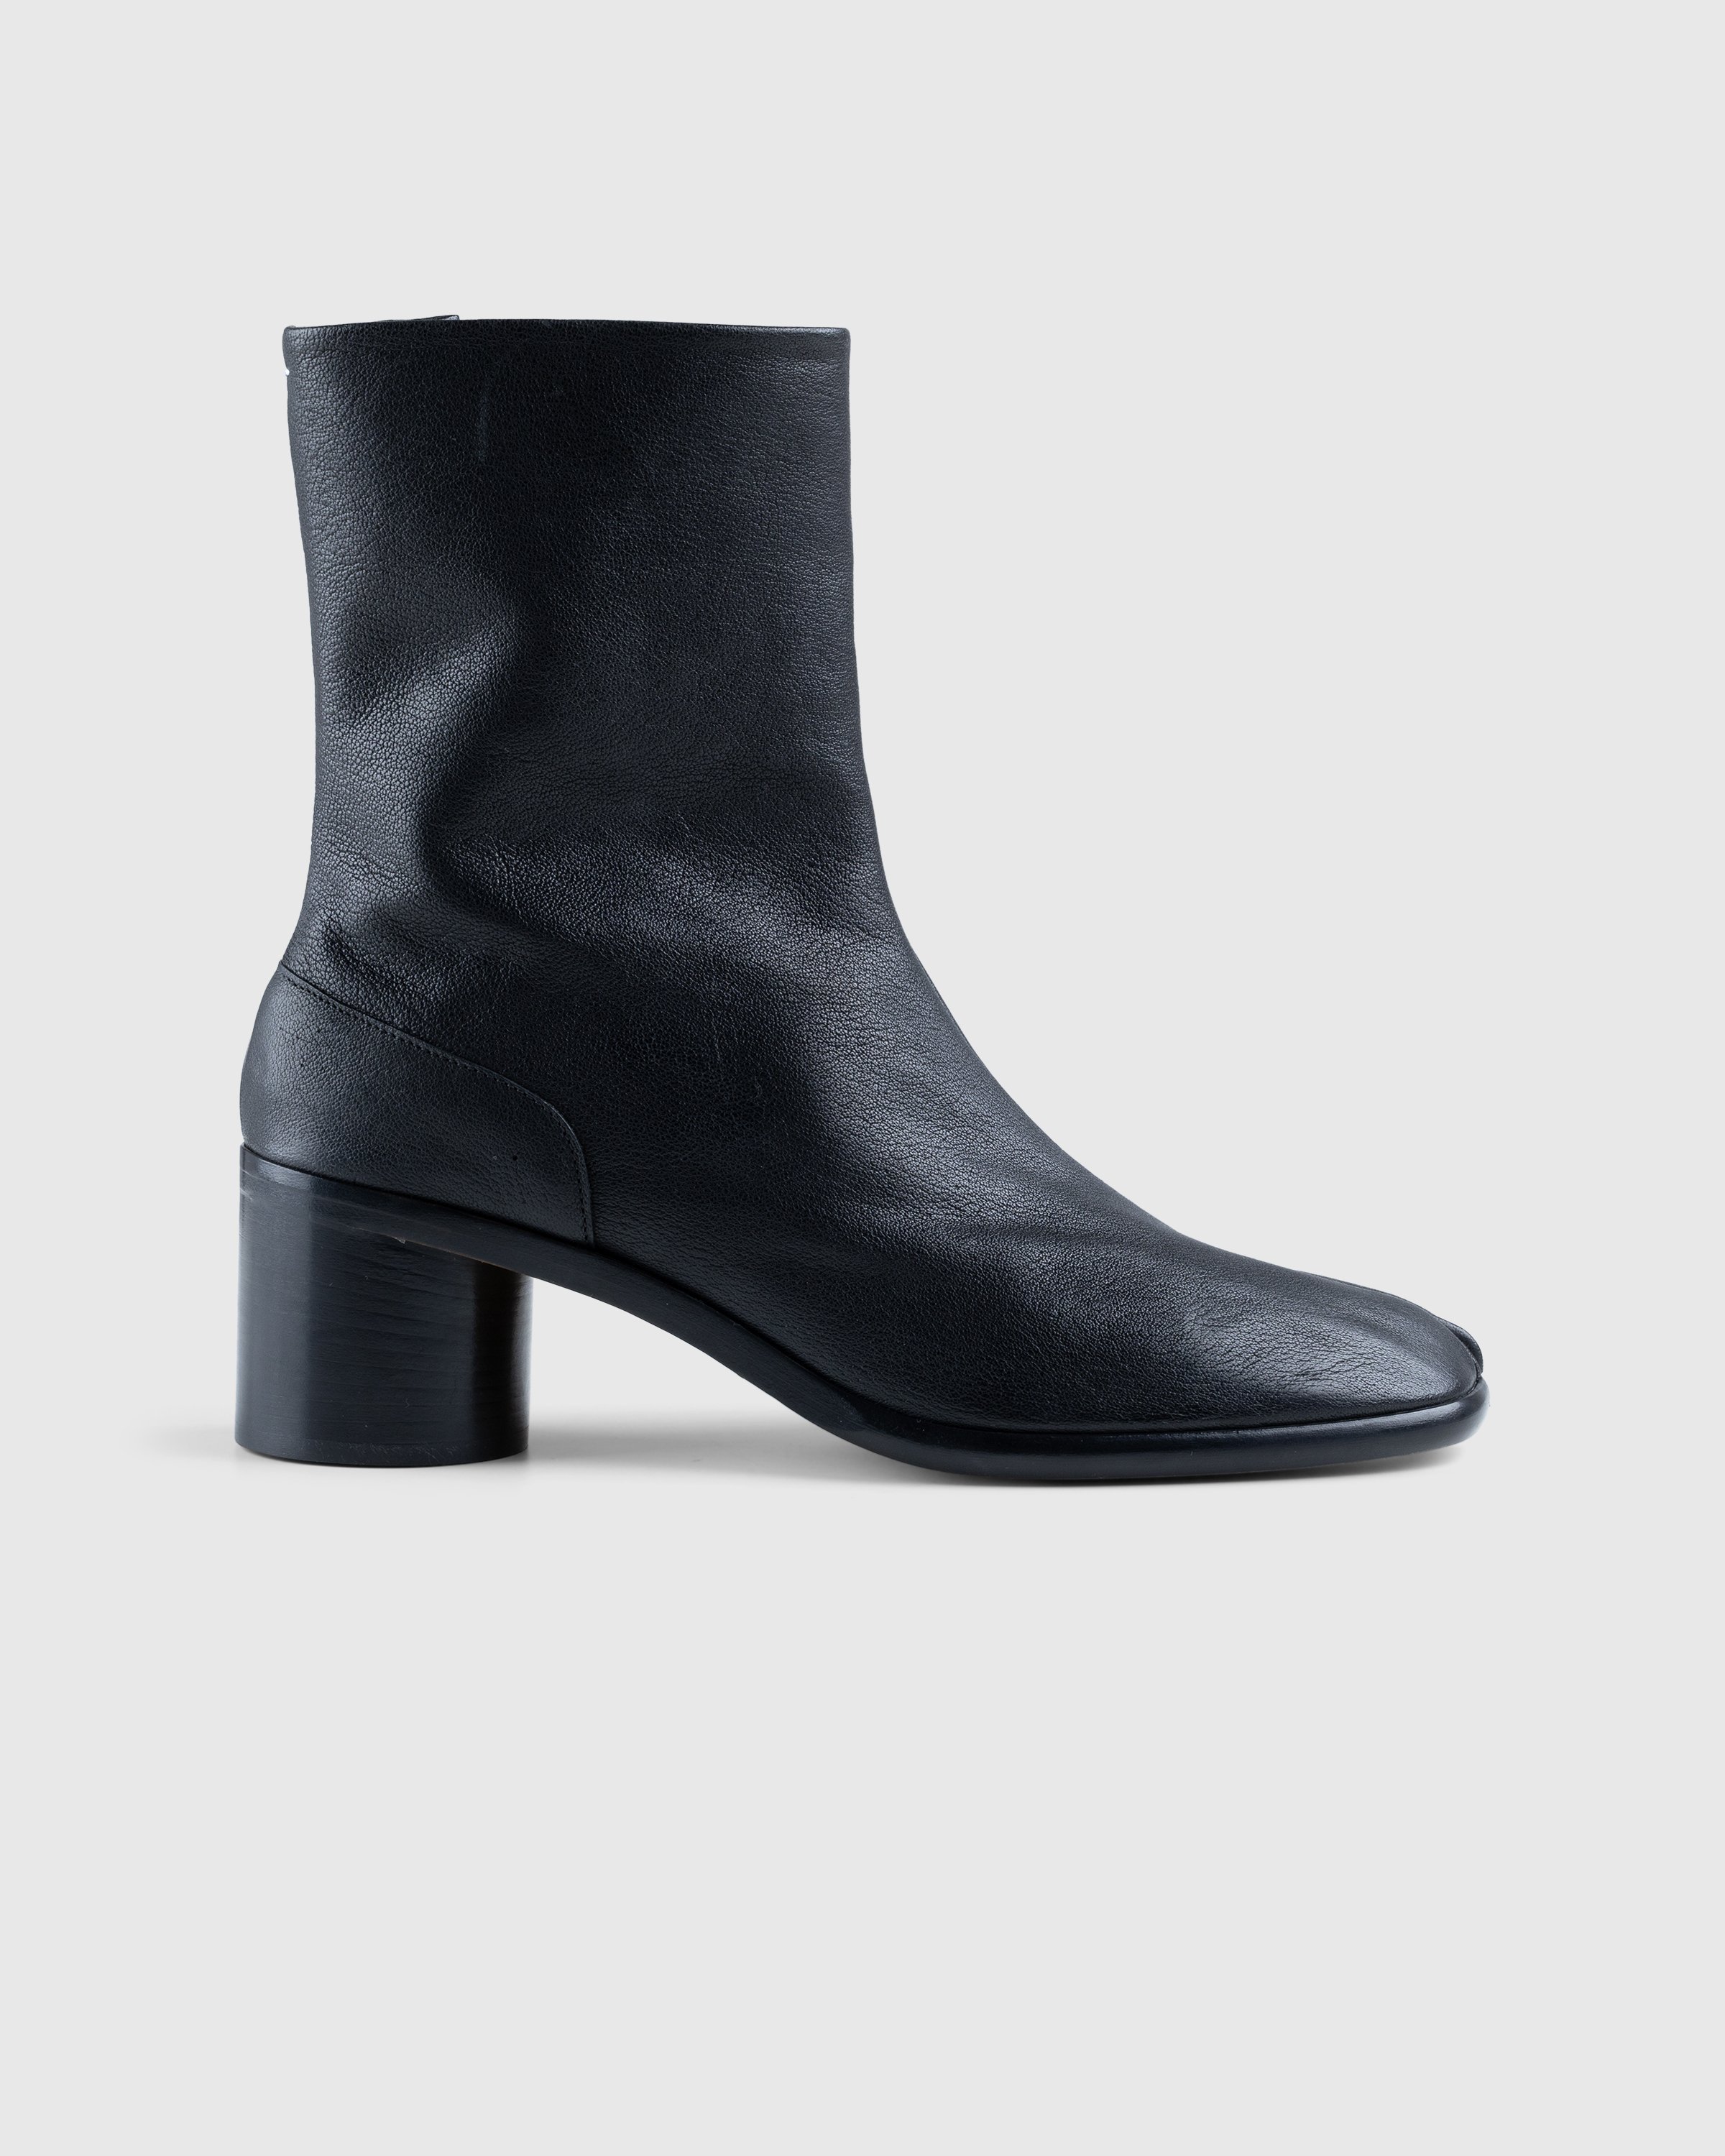 Maison Margiela - Leather Tabi Ankle Boot - Footwear - Black - Image 1